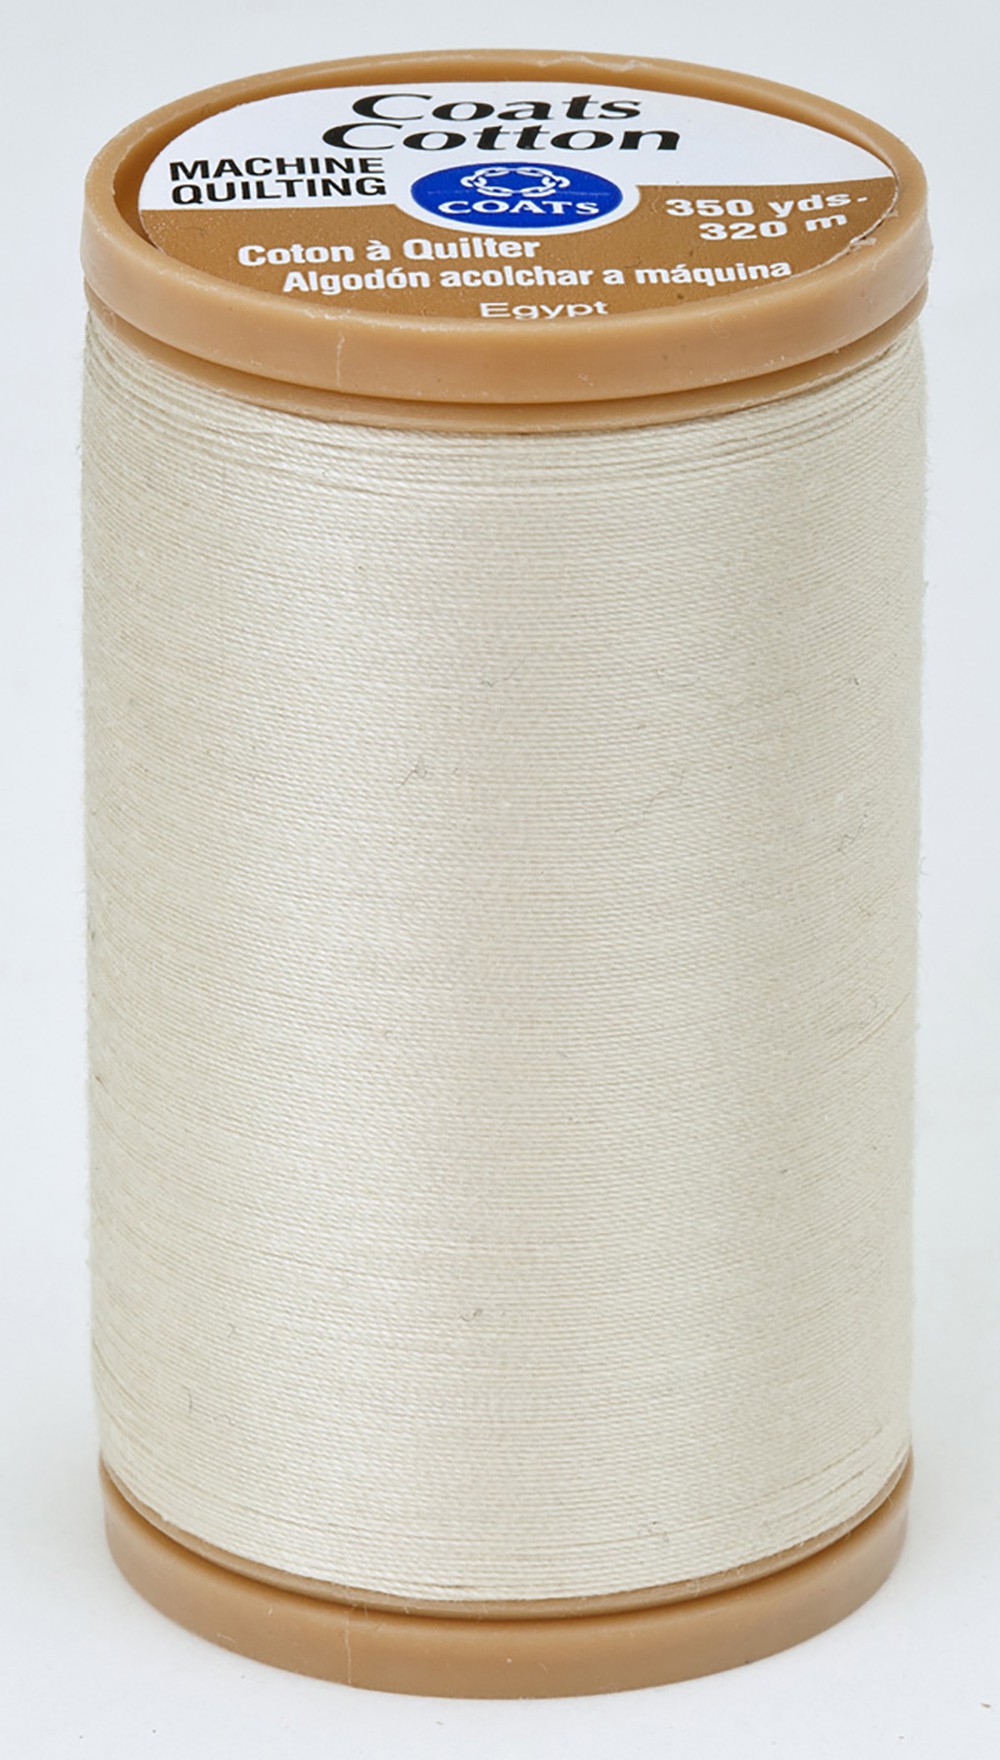 Coats Cotton Machine Quilting Thread 350 yds Cream